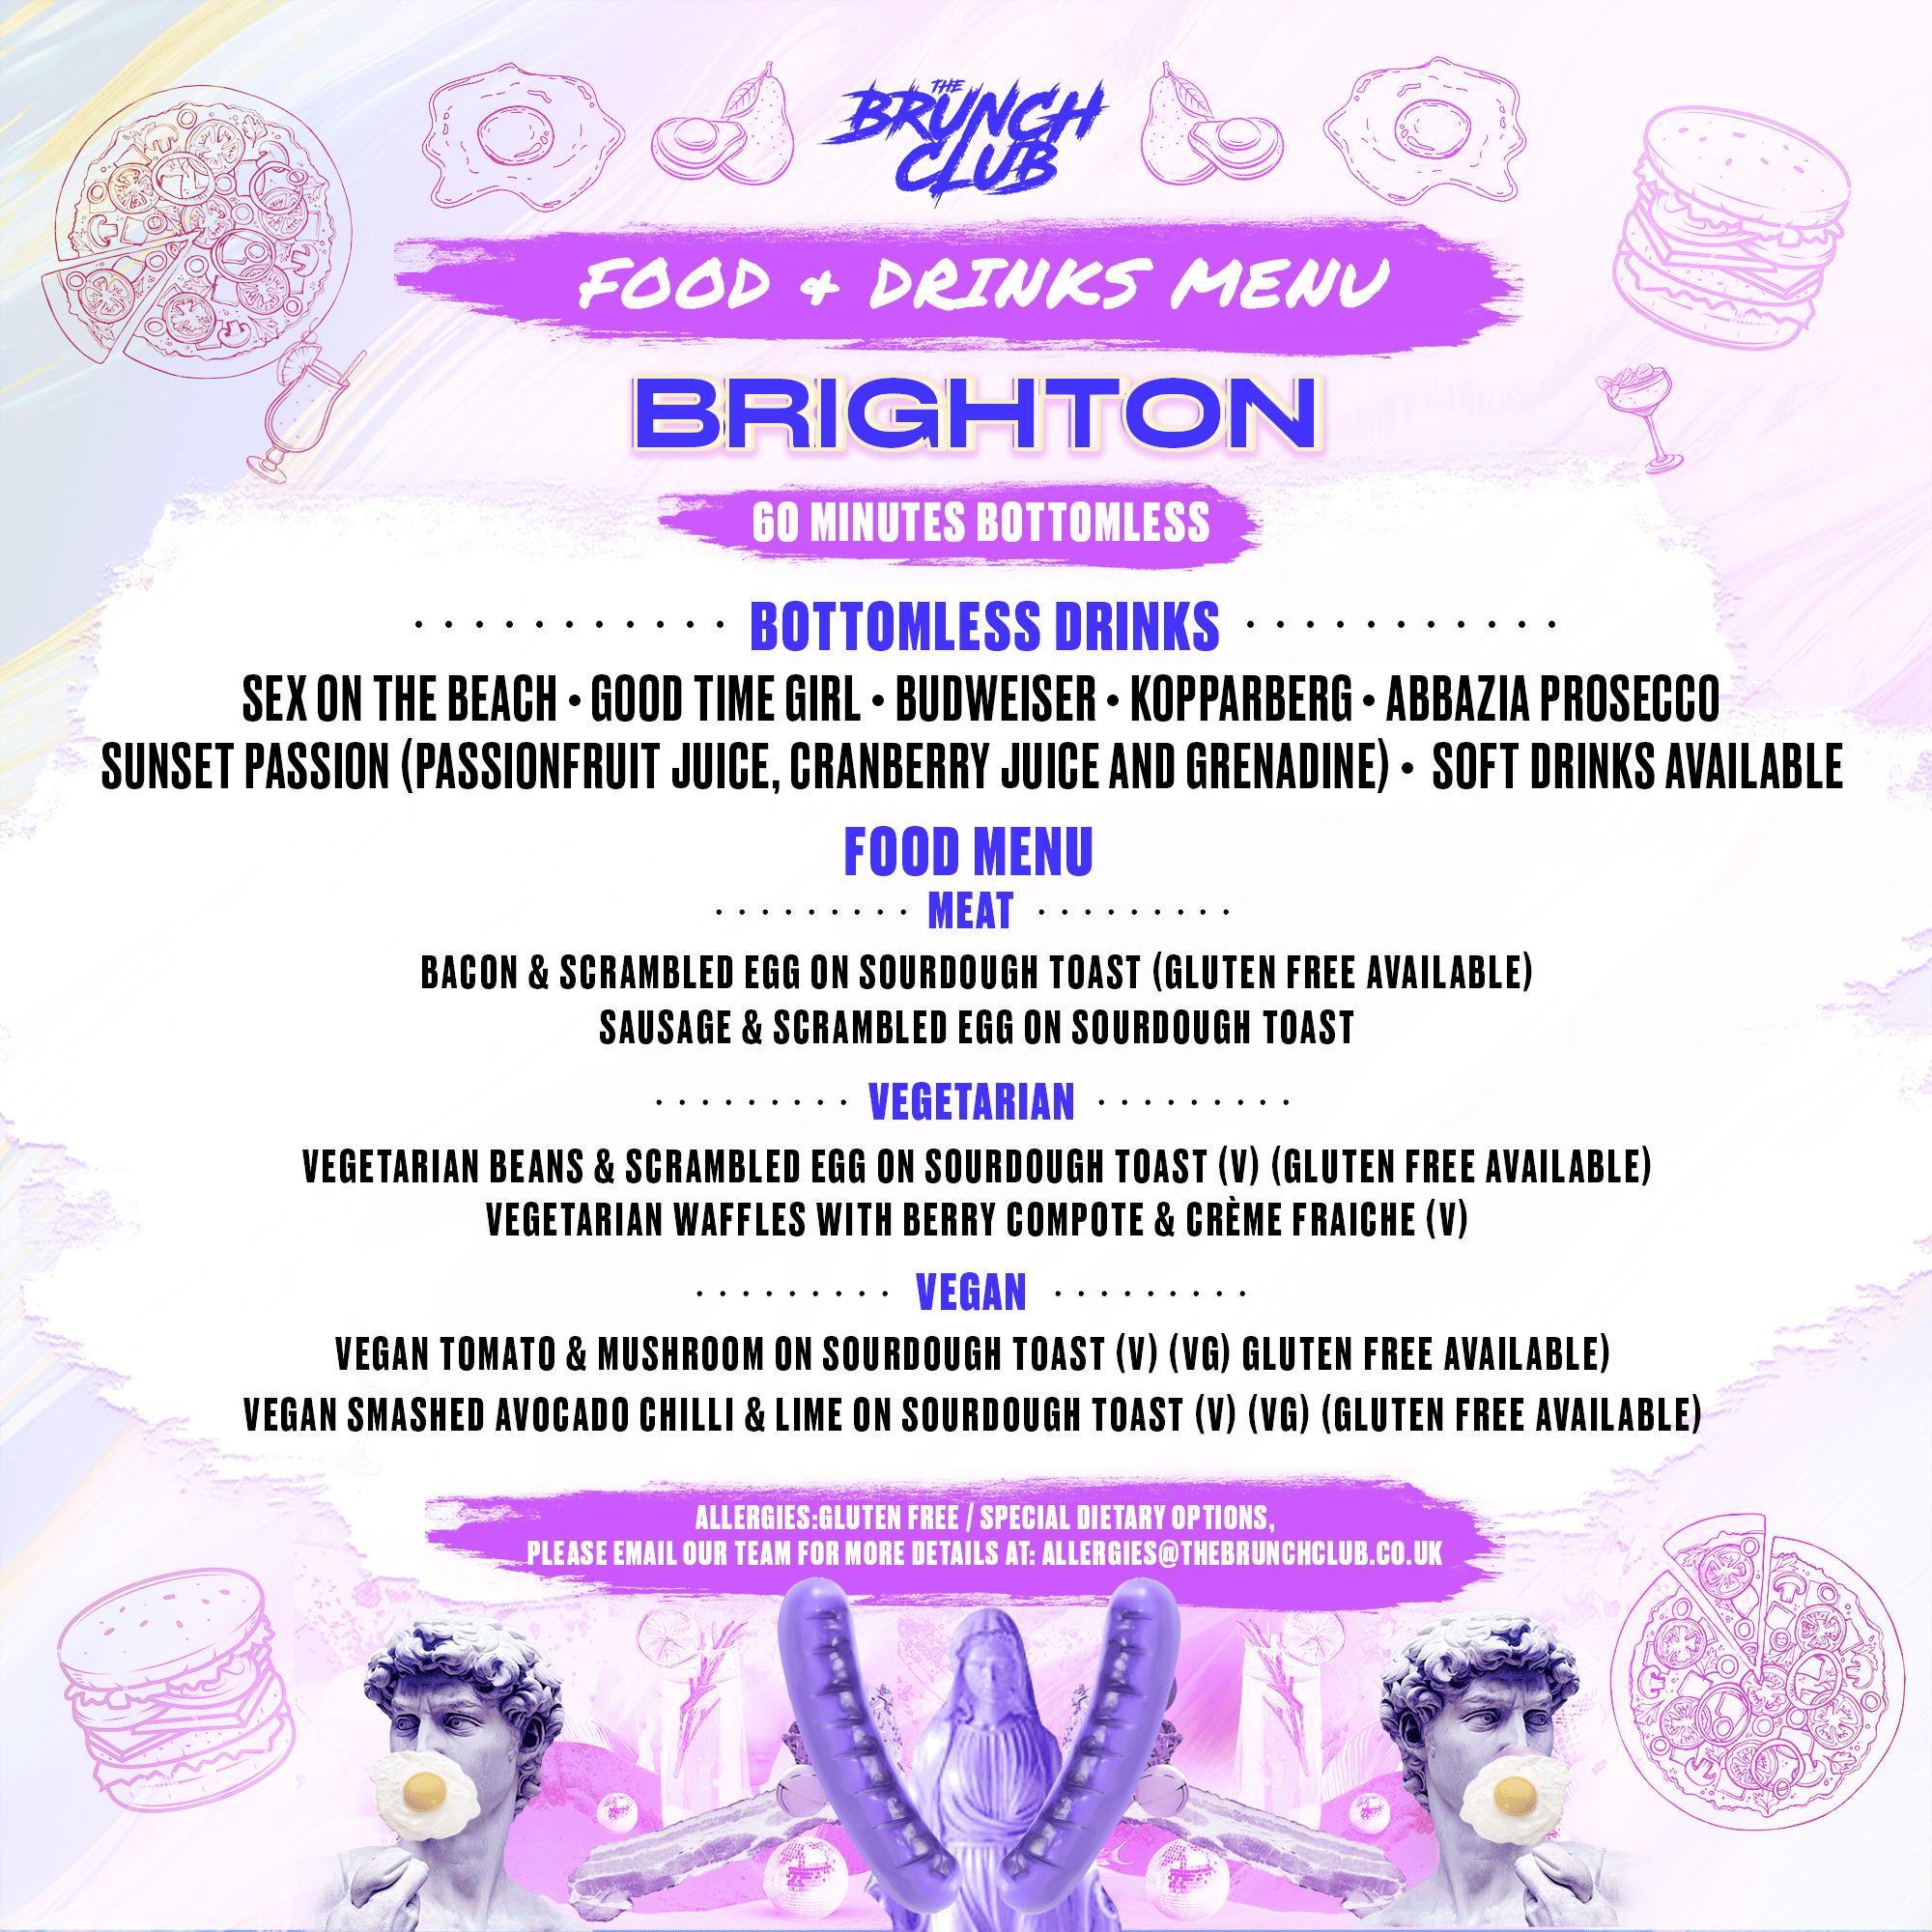 Spice Girls Drag Bottomless Brunch - Brighton